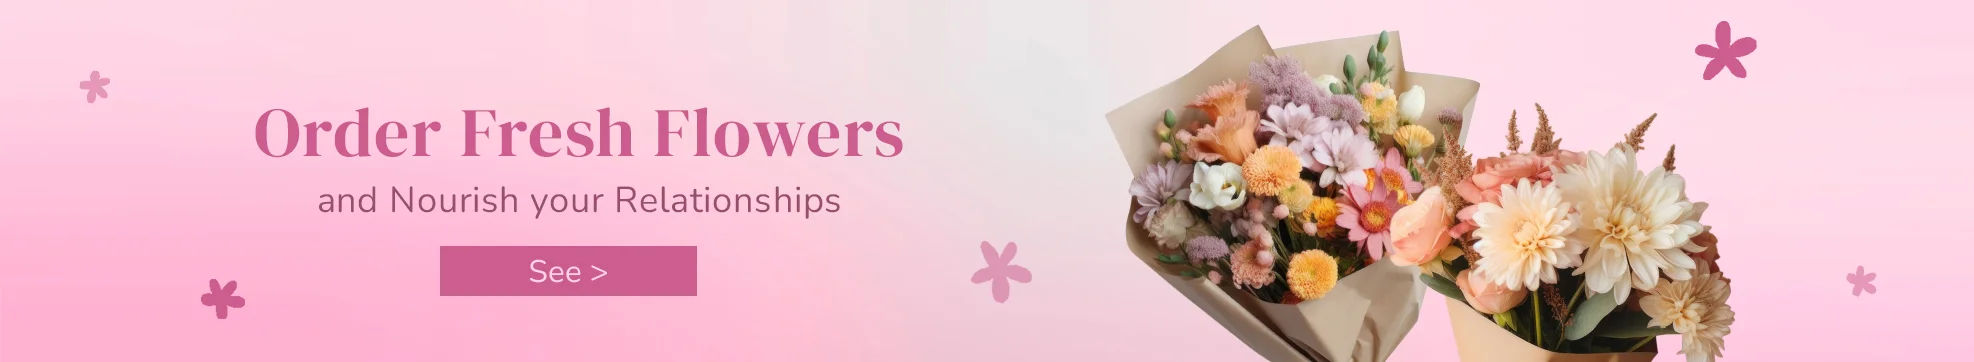 send fresh flowers online